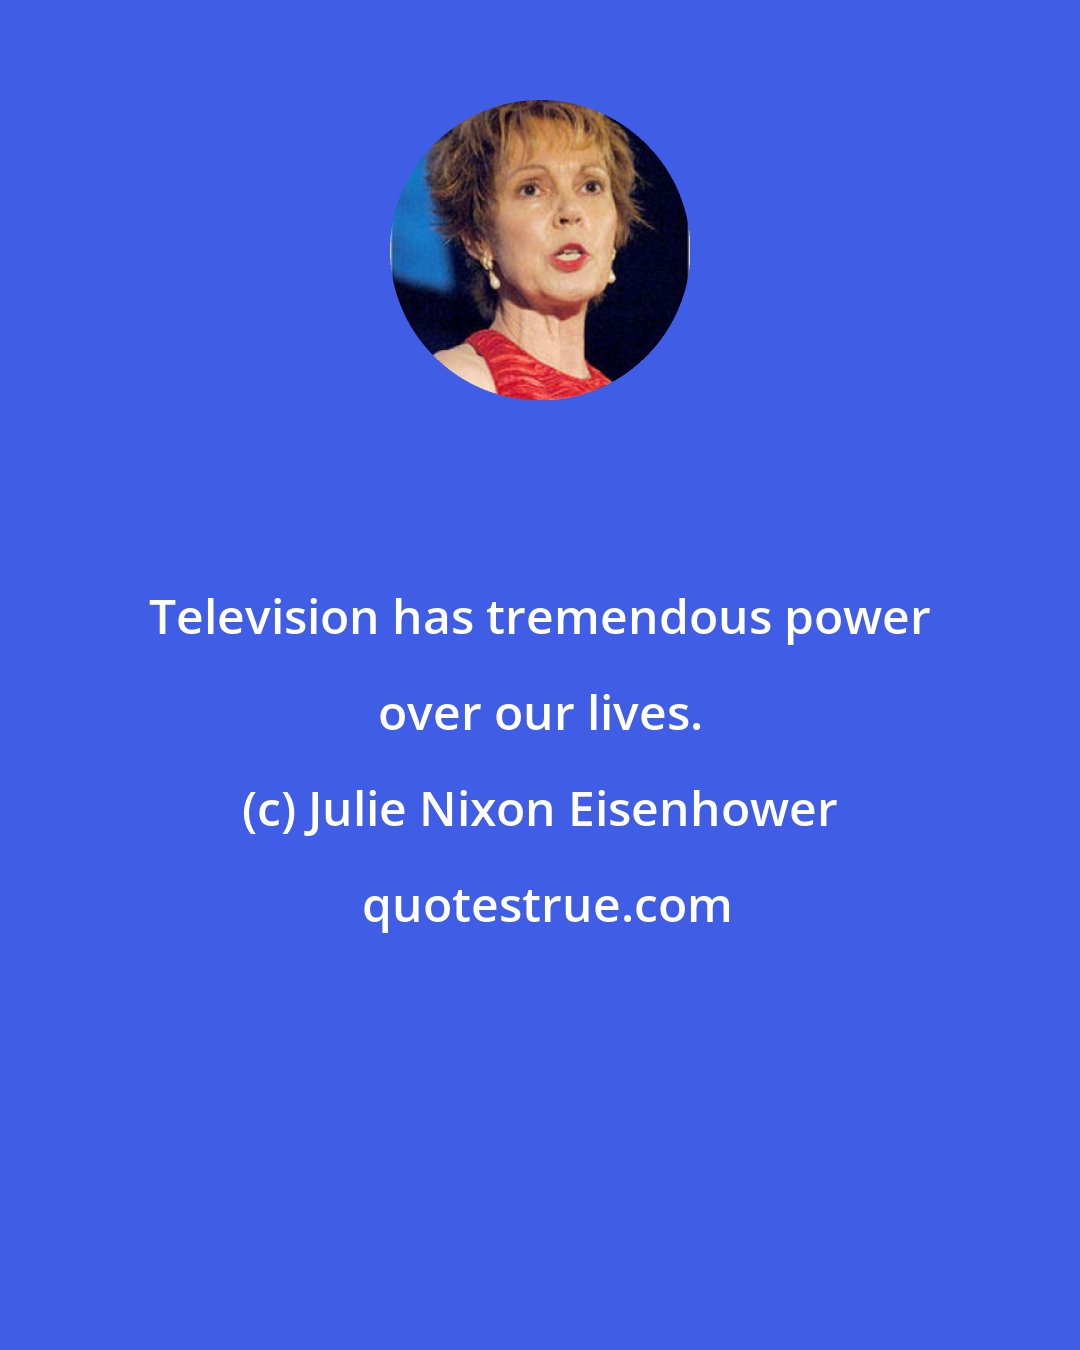 Julie Nixon Eisenhower: Television has tremendous power over our lives.